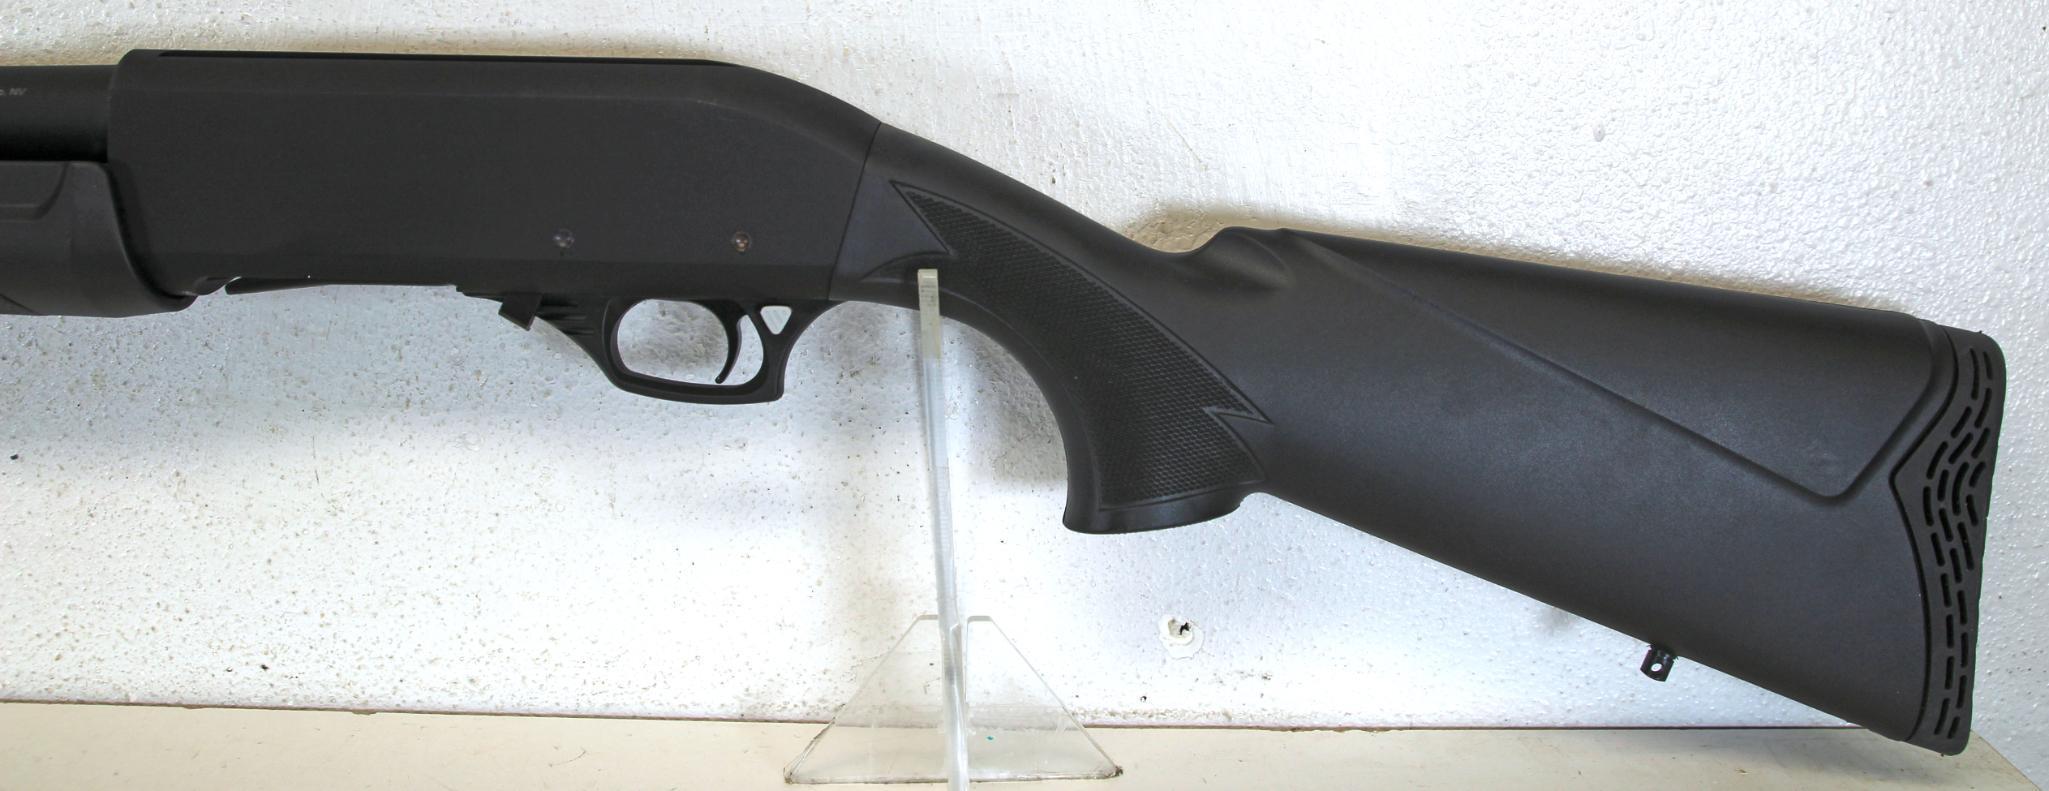 GForce Arms Model GF3 12 Ga. Pump Action Shotgun 20" Plain Barrel... SN#21-22226...